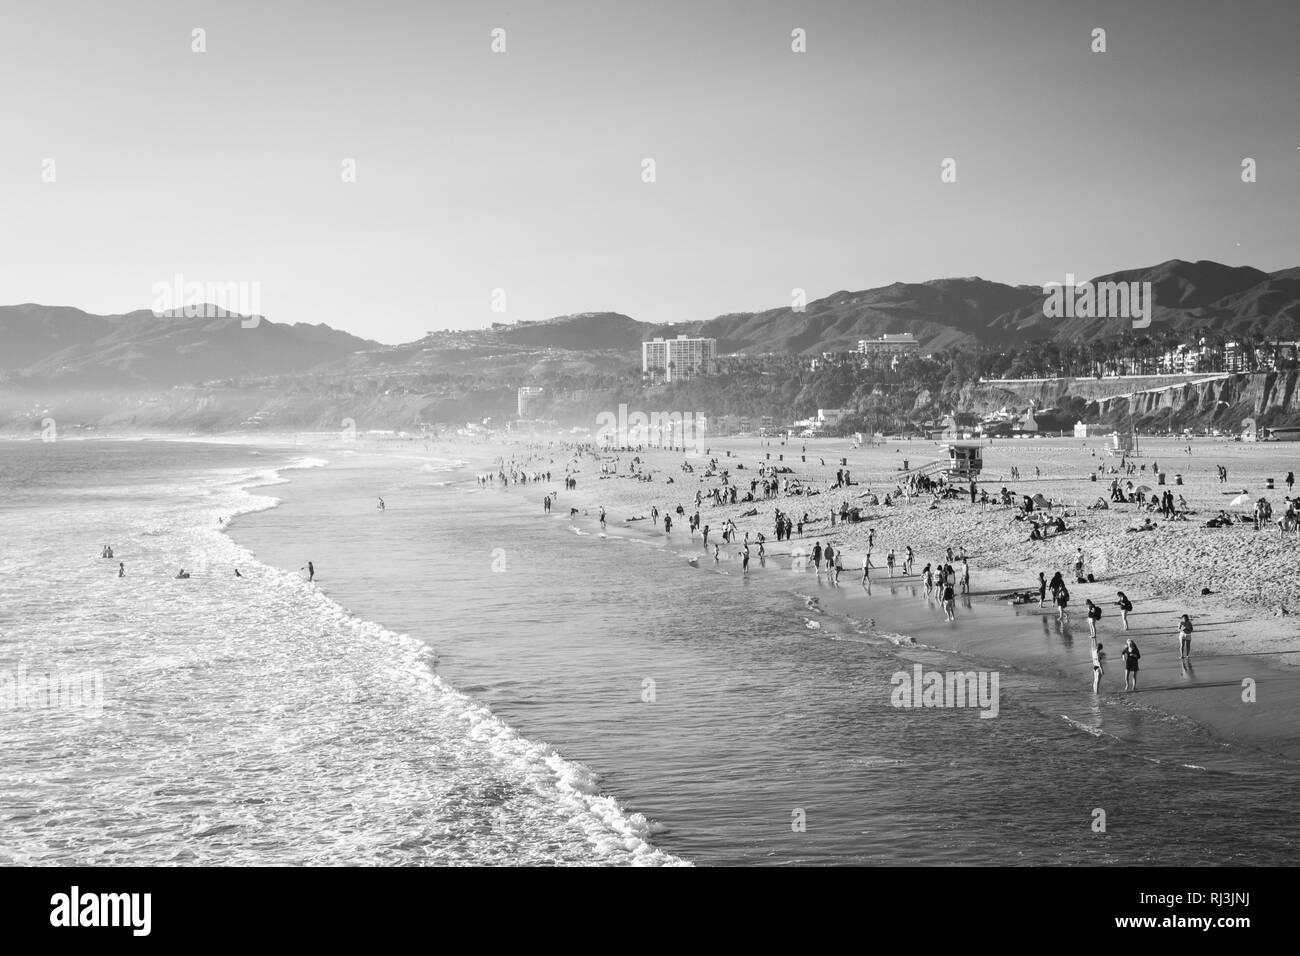 View of the beach in Santa Monica, California. Stock Photo